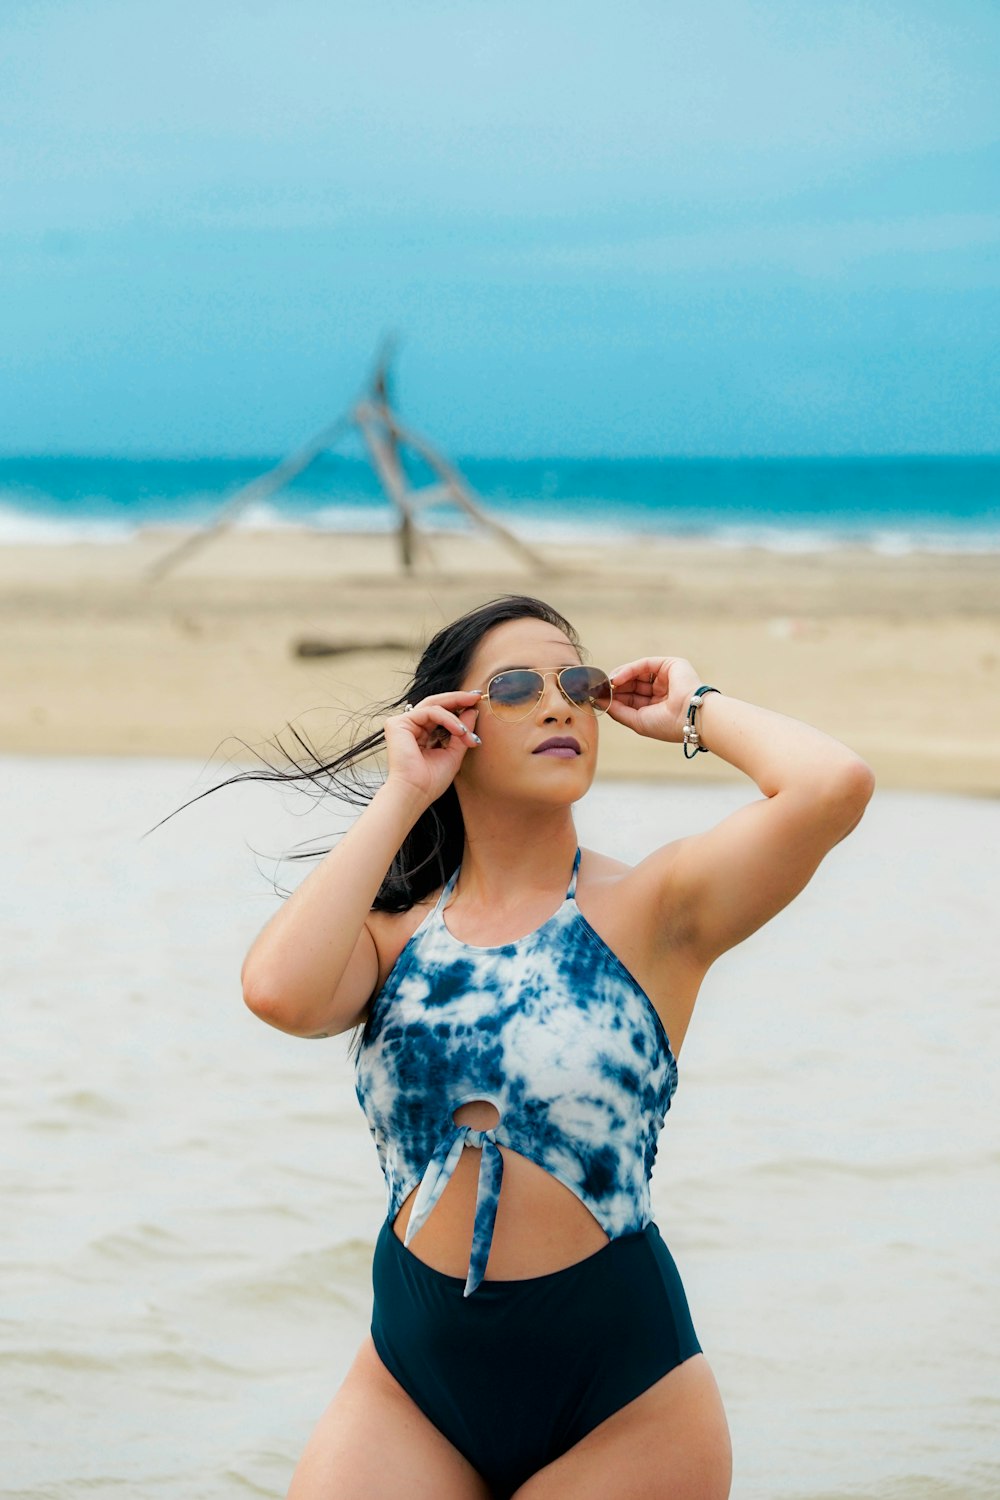 woman in black and blue bikini standing on seashore during daytime